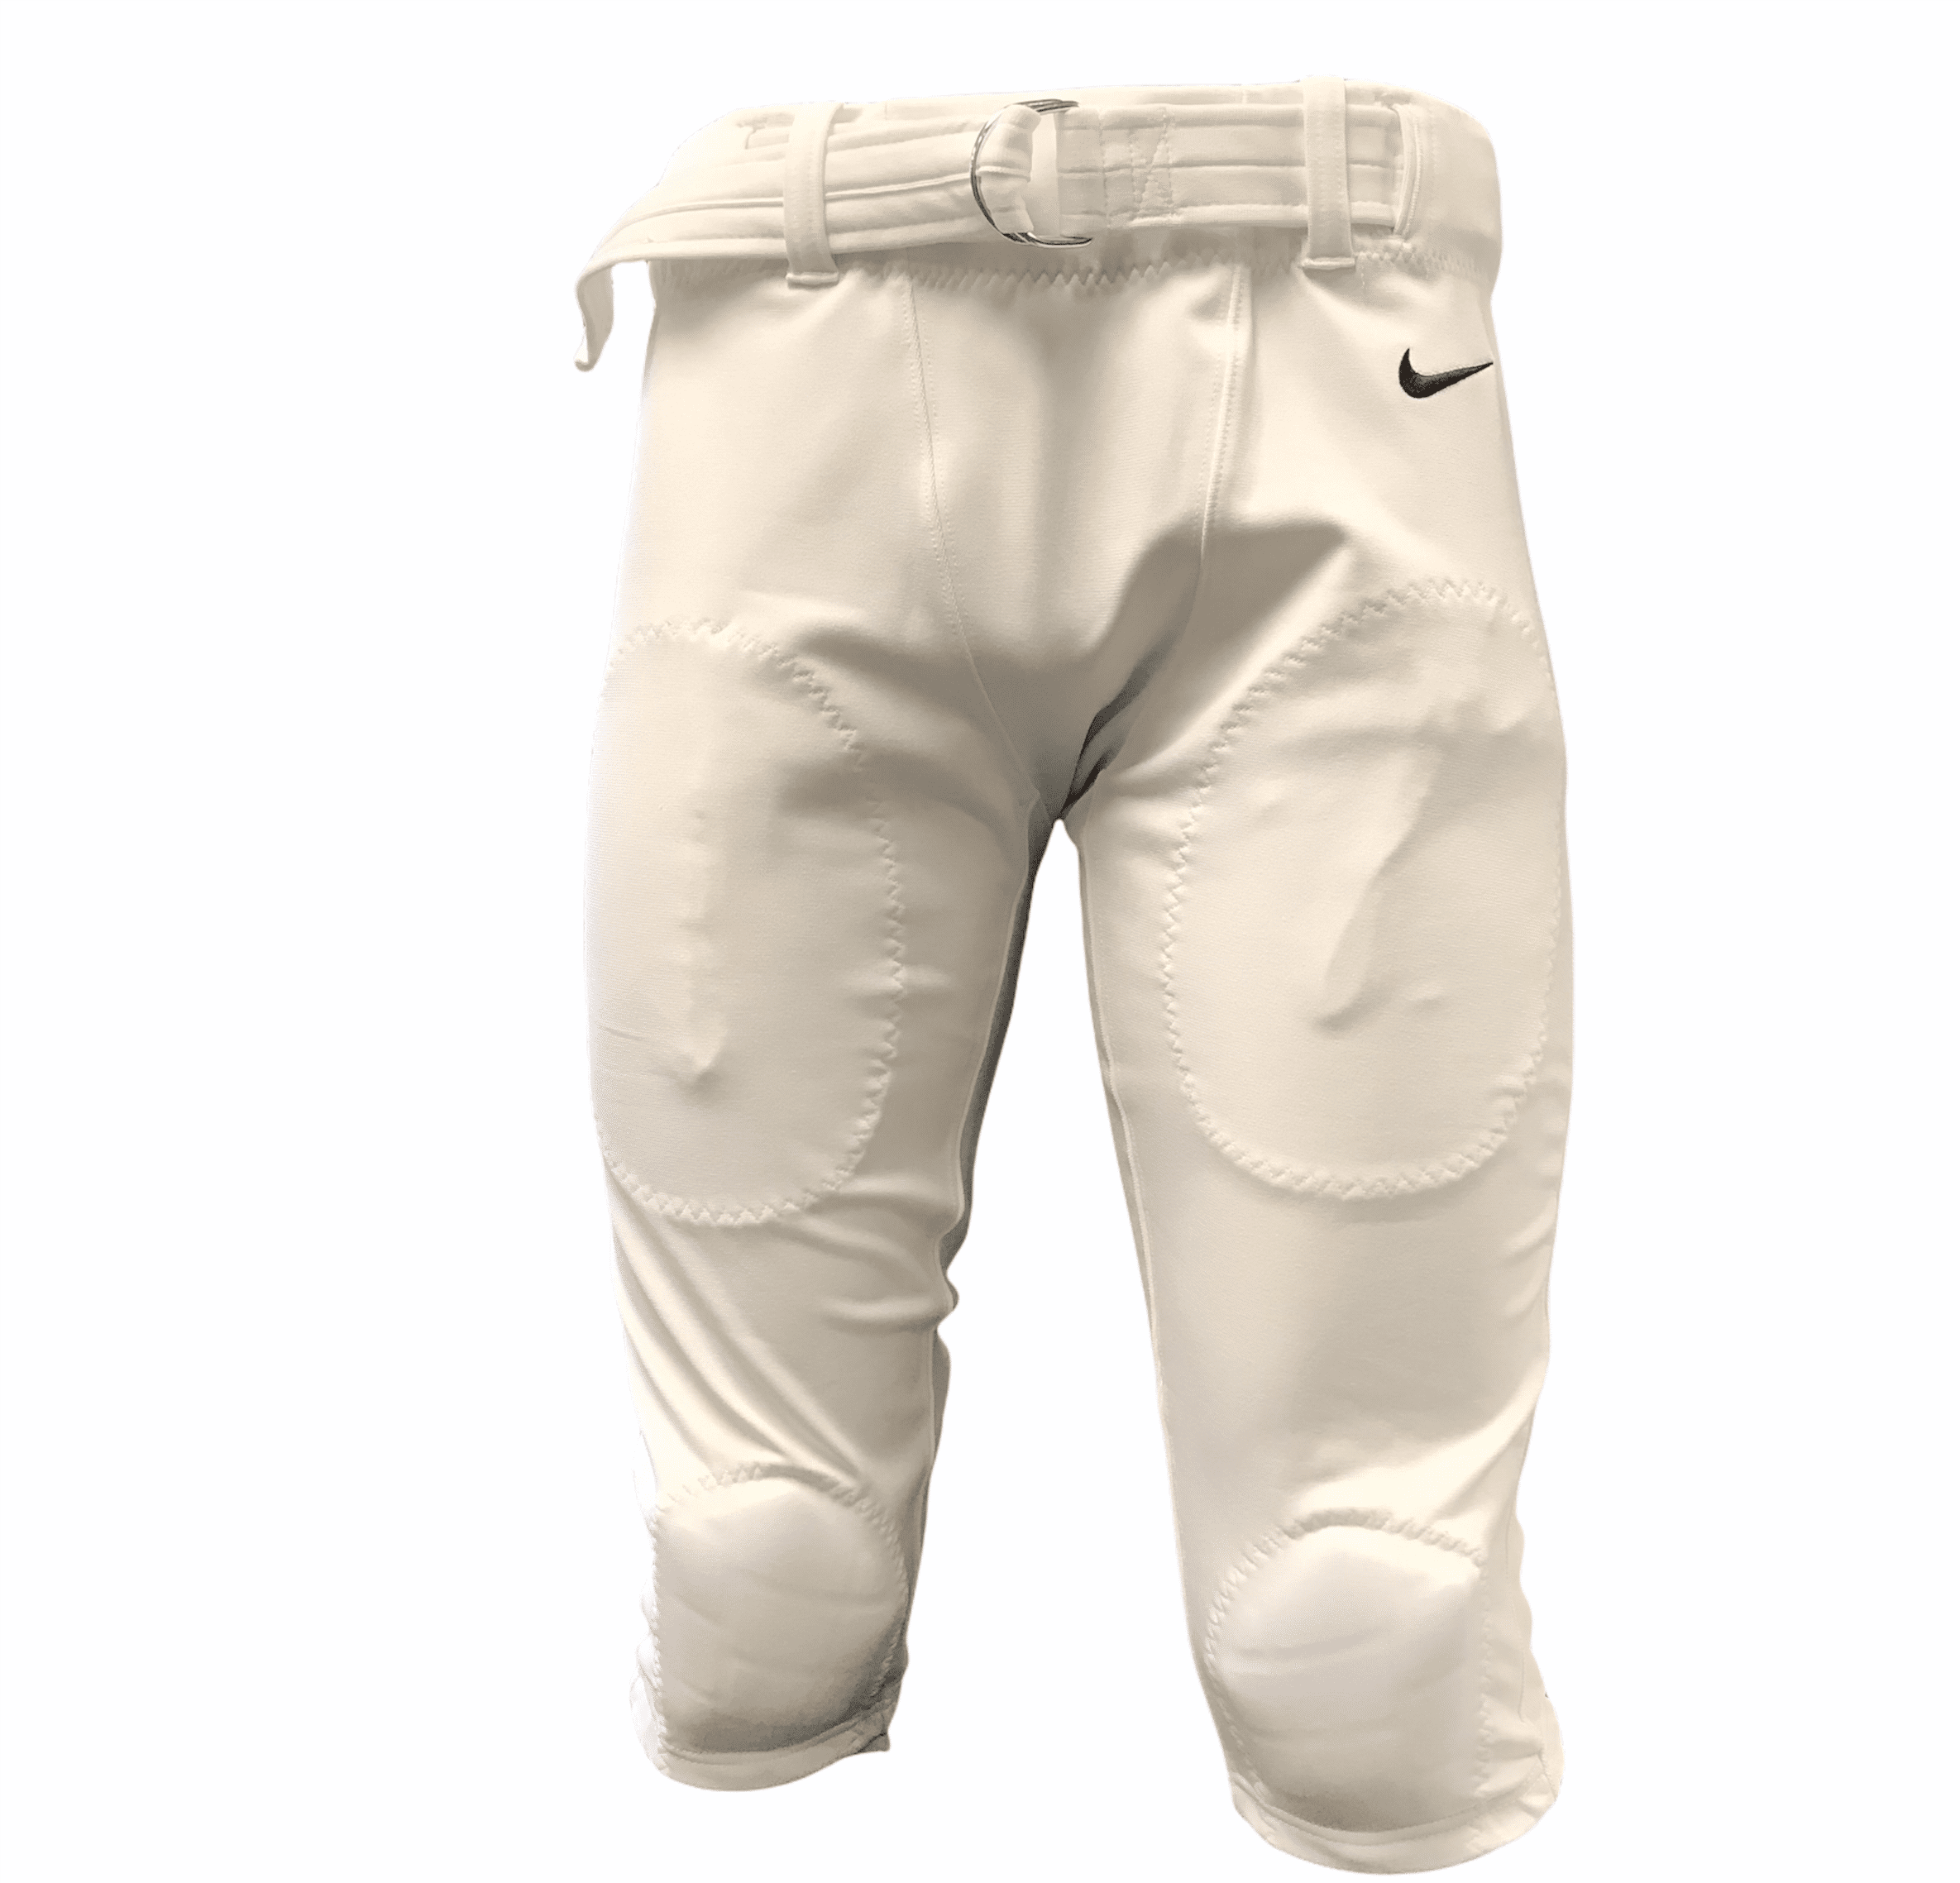 Nike Mach Men's Football Pants, White, Large -